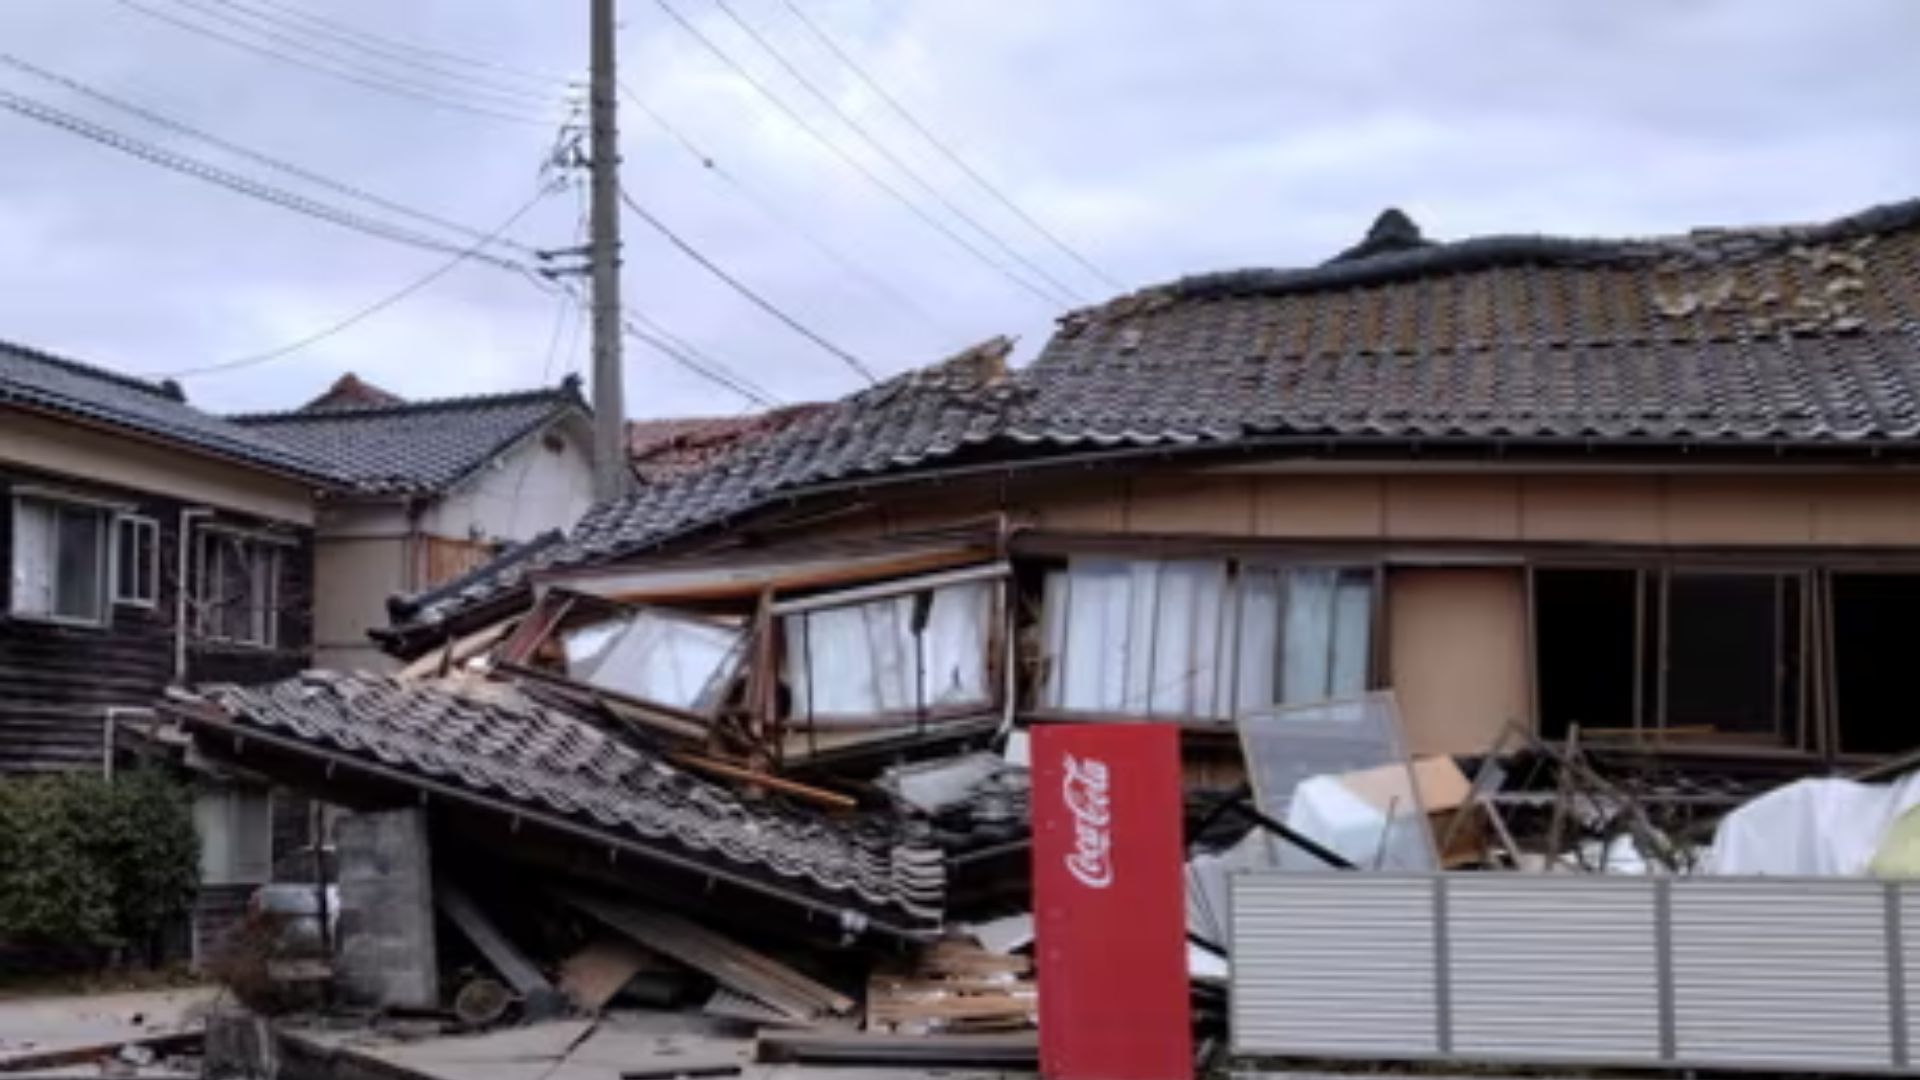 7.5 magnitude earthquake strikes central Japan, tsunami warning issued